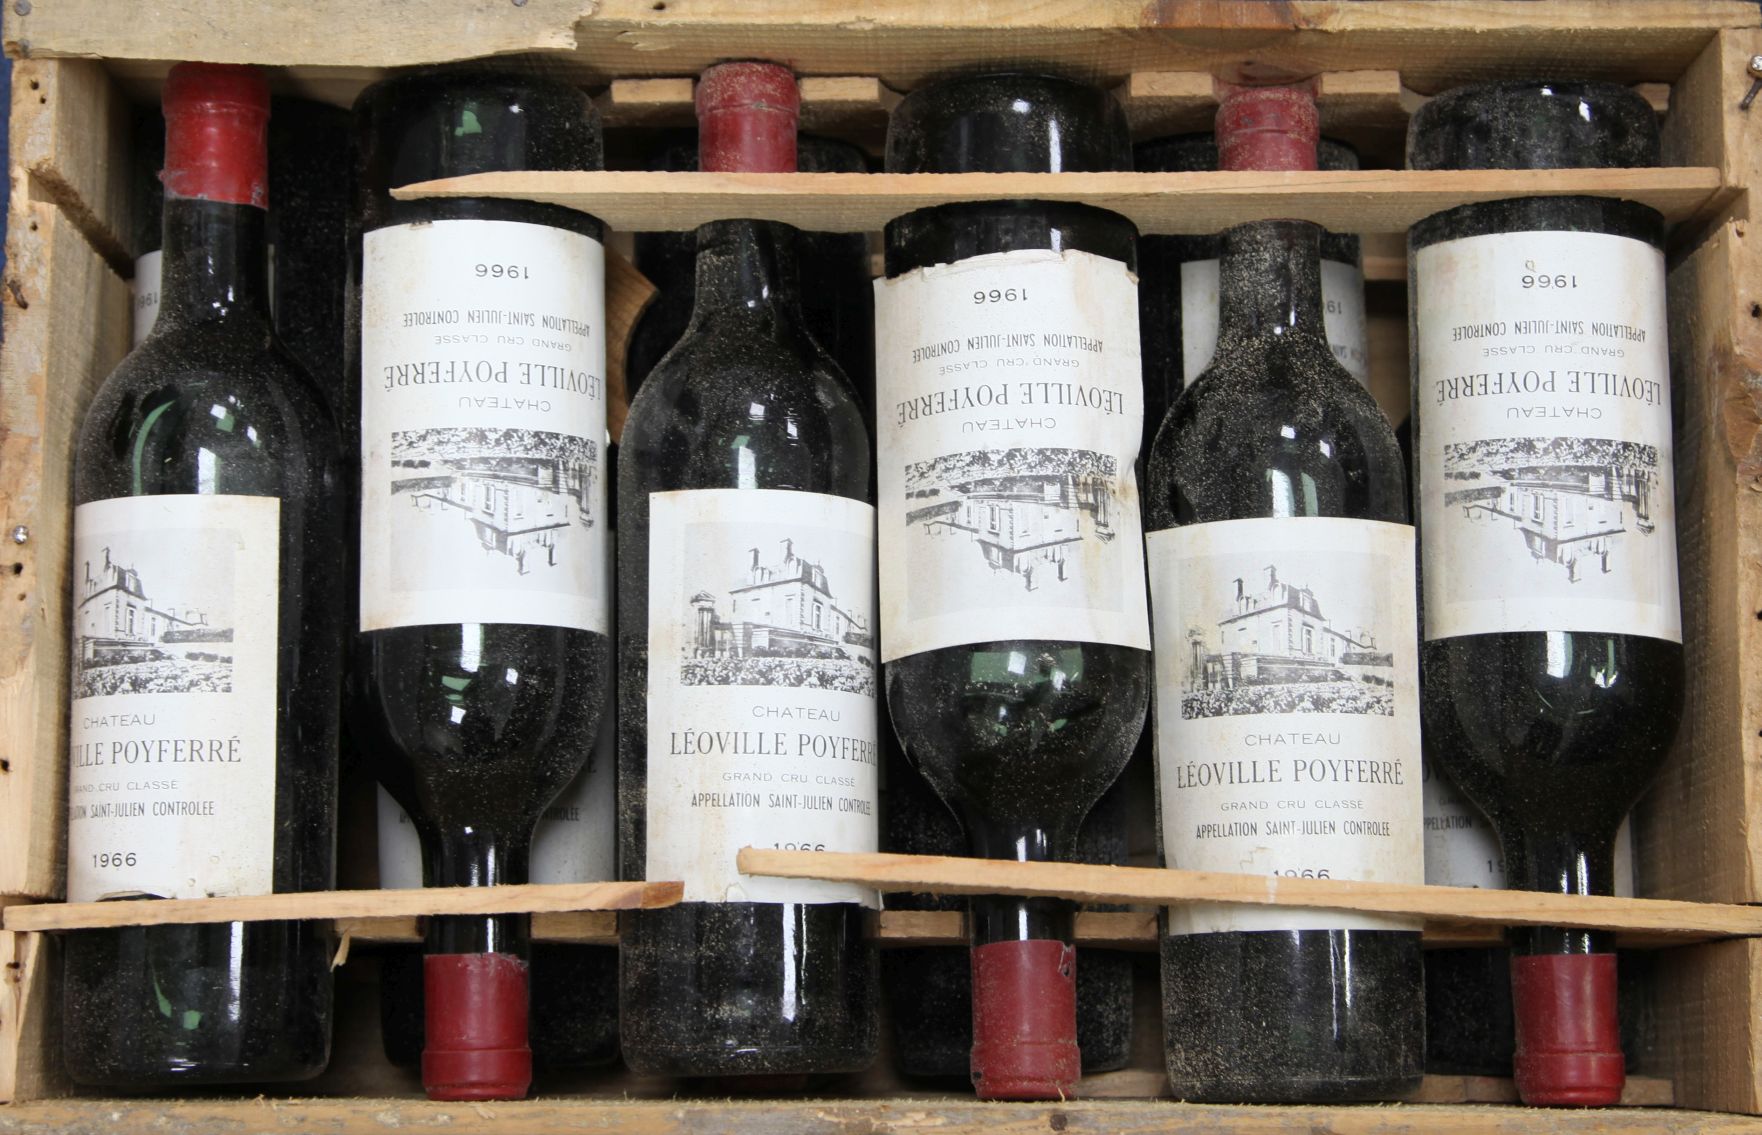 Twelve bottles of Chateau Leoville-Poyferré, 1966.